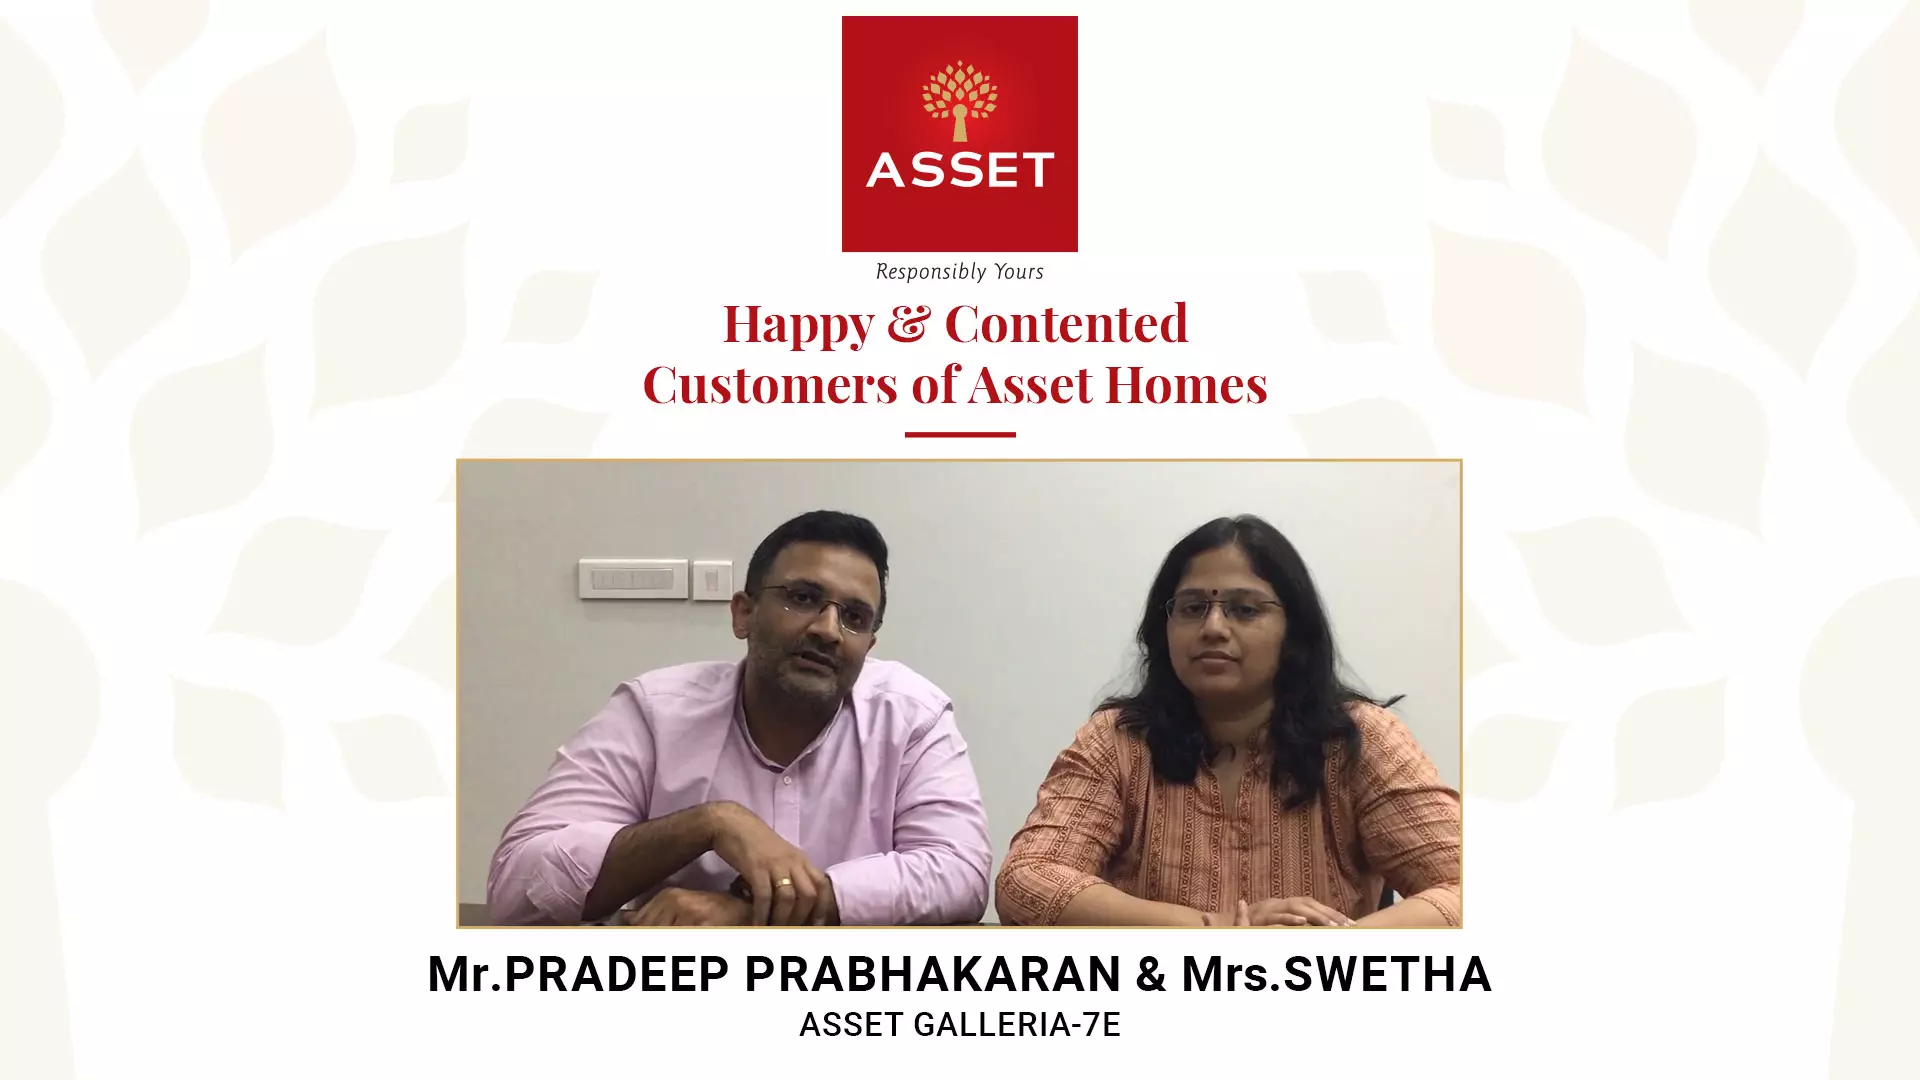 Mr. Pradeep Prabhakaran & Mrs Swetha, Asset Galleria 7E